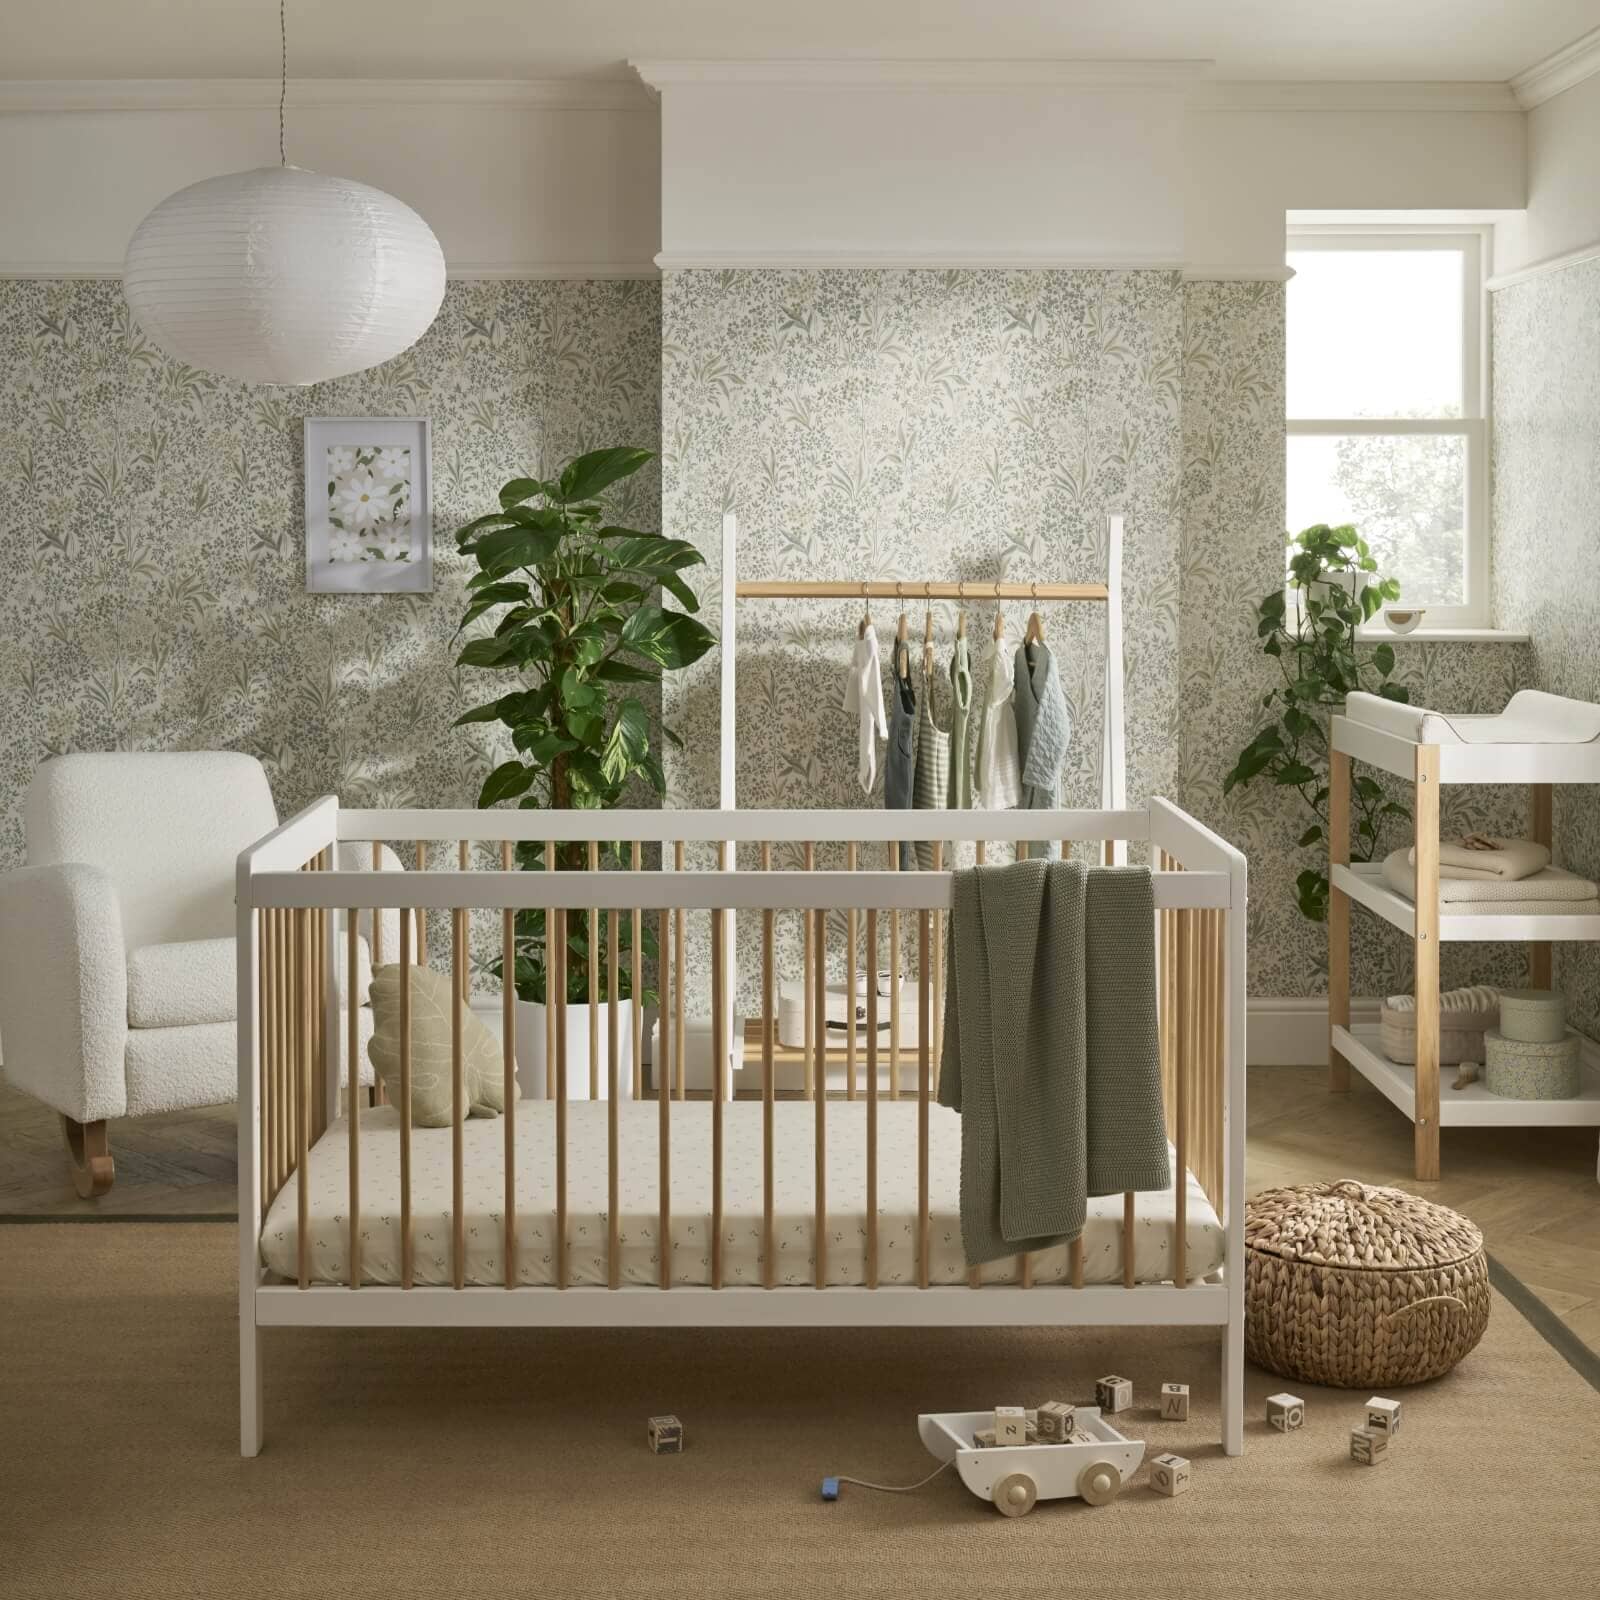 Nola 3 Piece Nursery Furniture Set - White & Natural Furniture Sets CuddleCo 